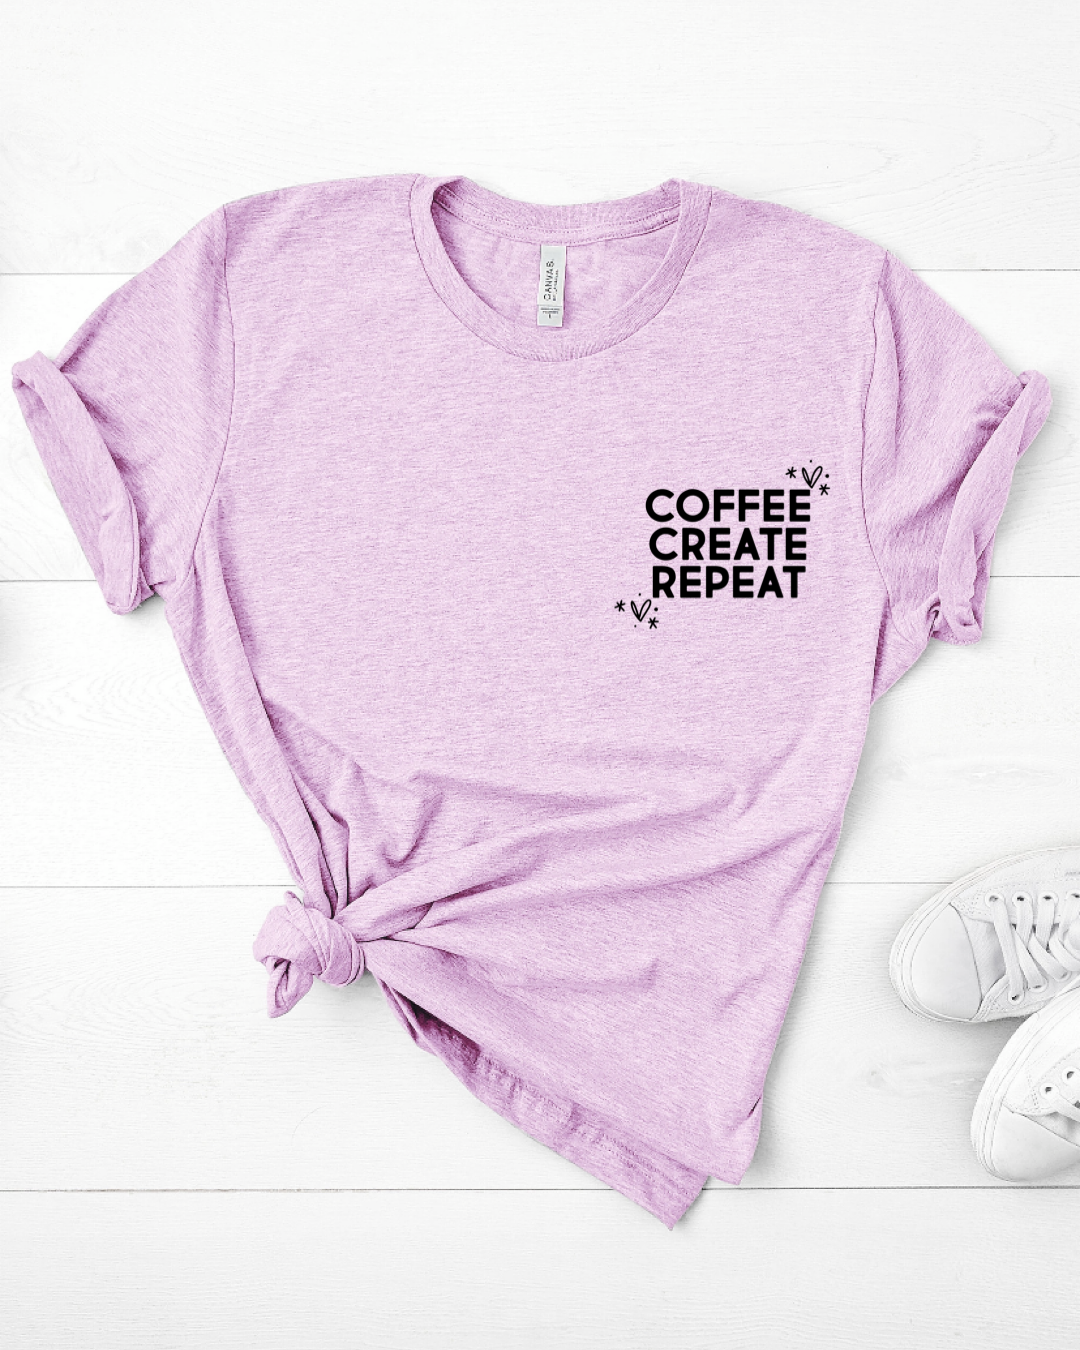 Coffee, create, repeat